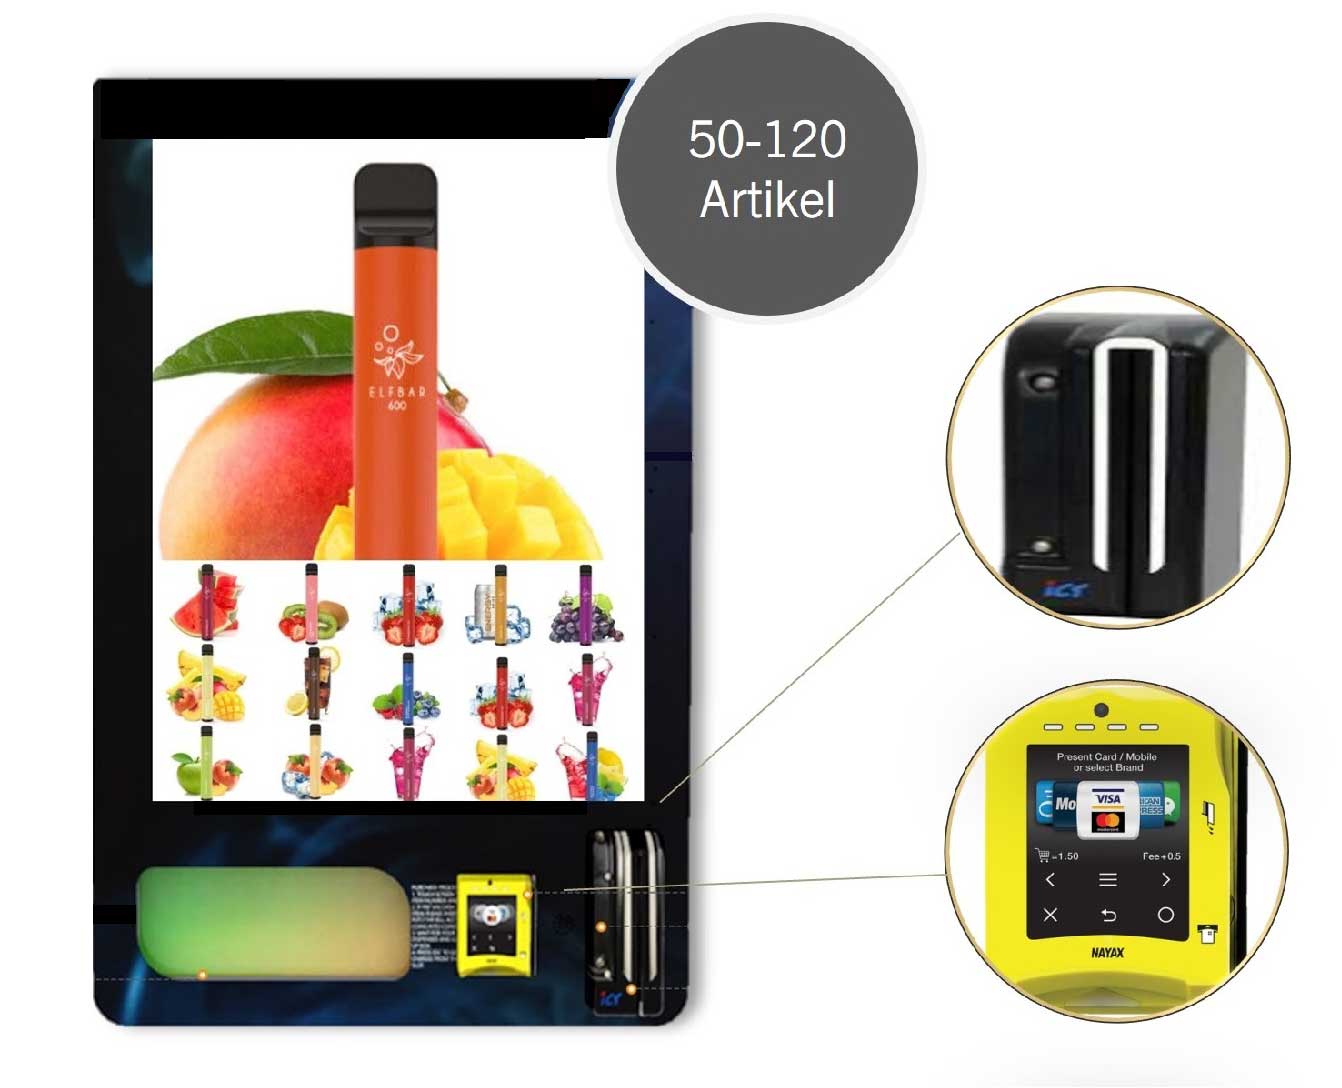 VAPEMAXX "L" - Verkaufsautomat für E-Zigaretten, Liquids und Zubehör